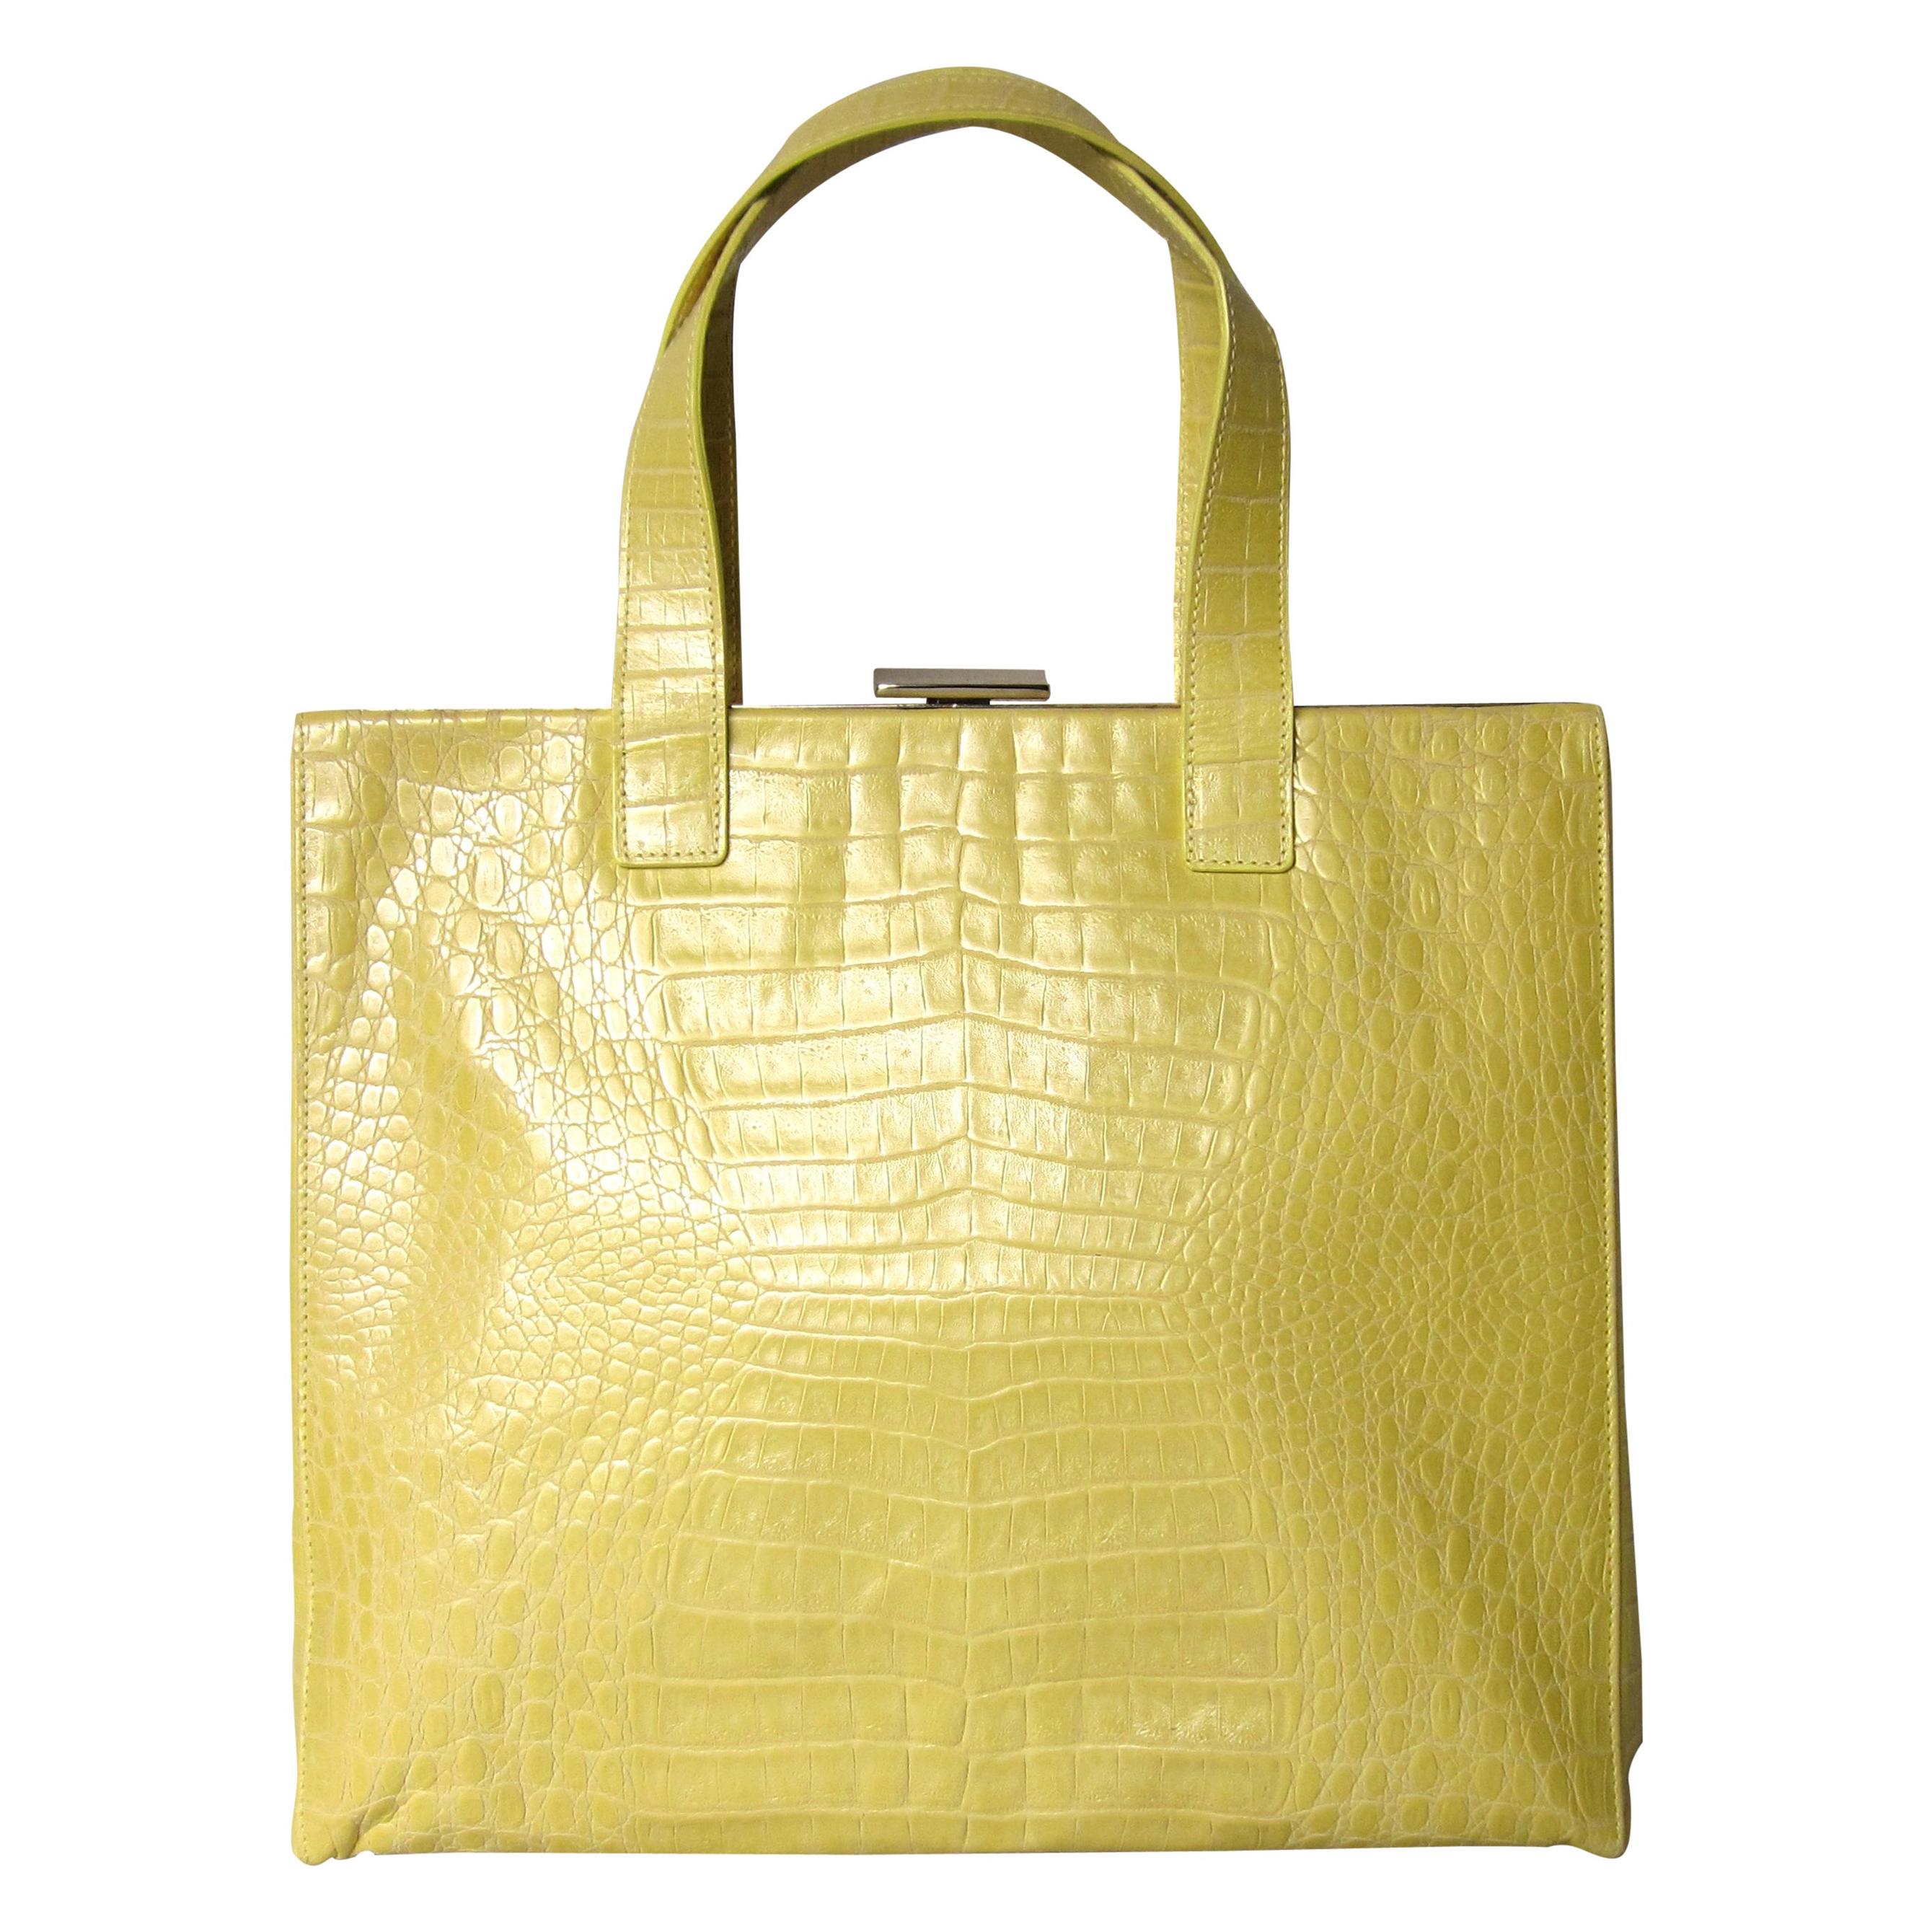 ESCADA YELLOW Pearl Croc Leather Large Handbag New, Never Used 